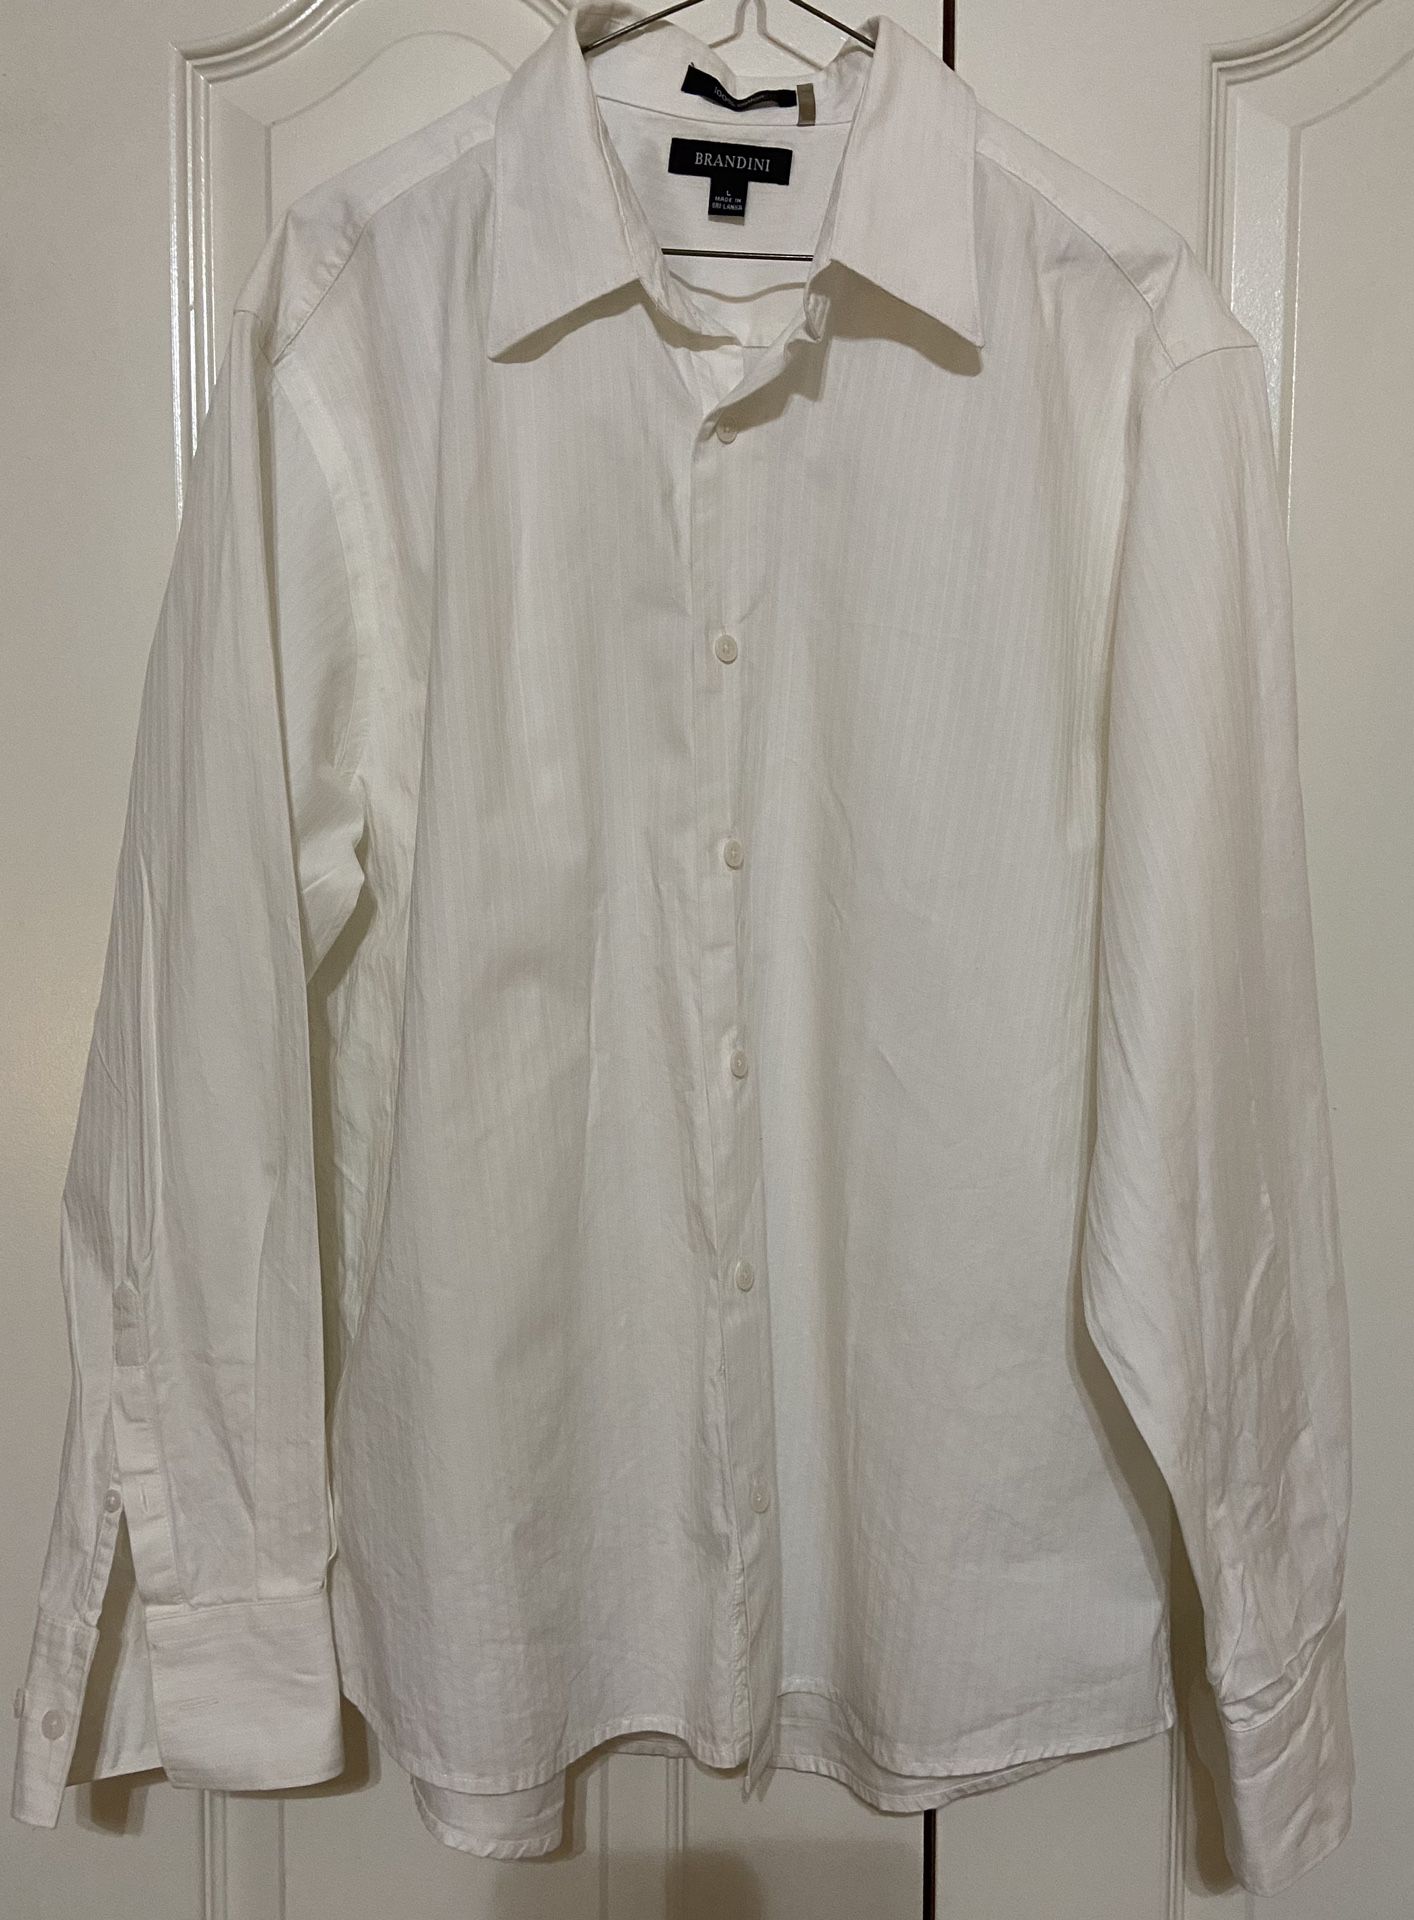 Men's White Brandini Dress Shirt Large